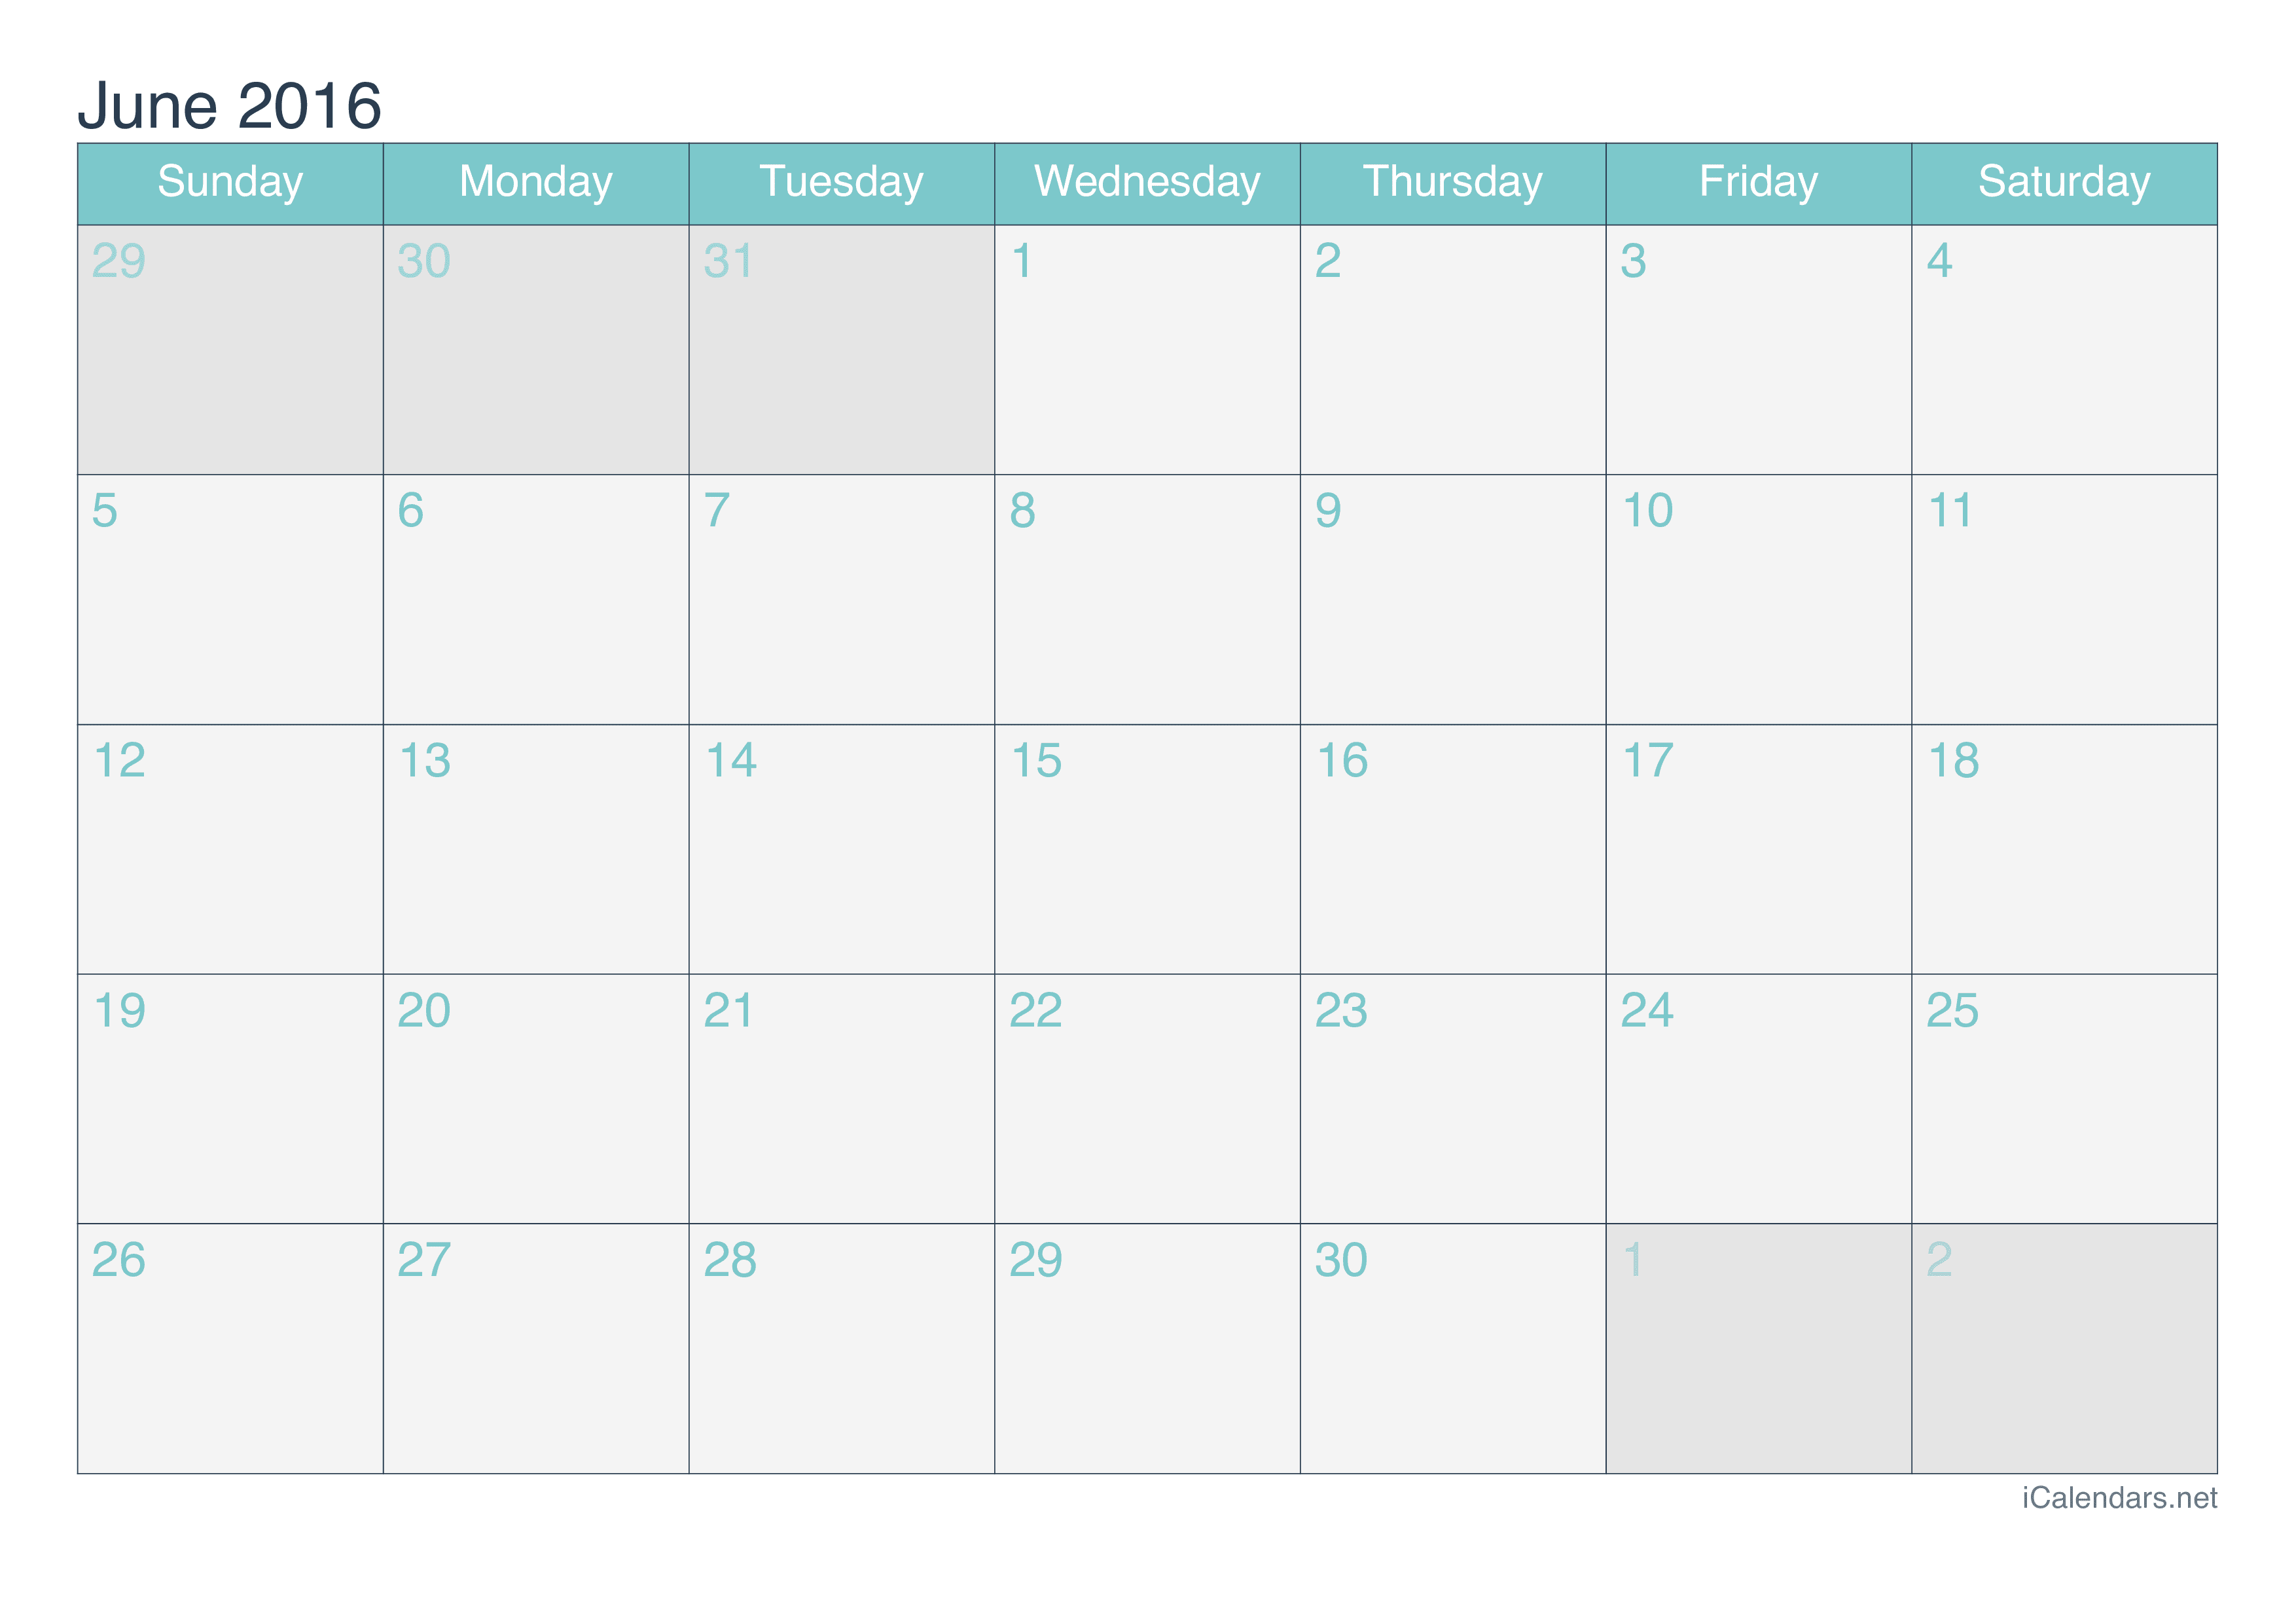 June 2016 Printable Calendar icalendars net